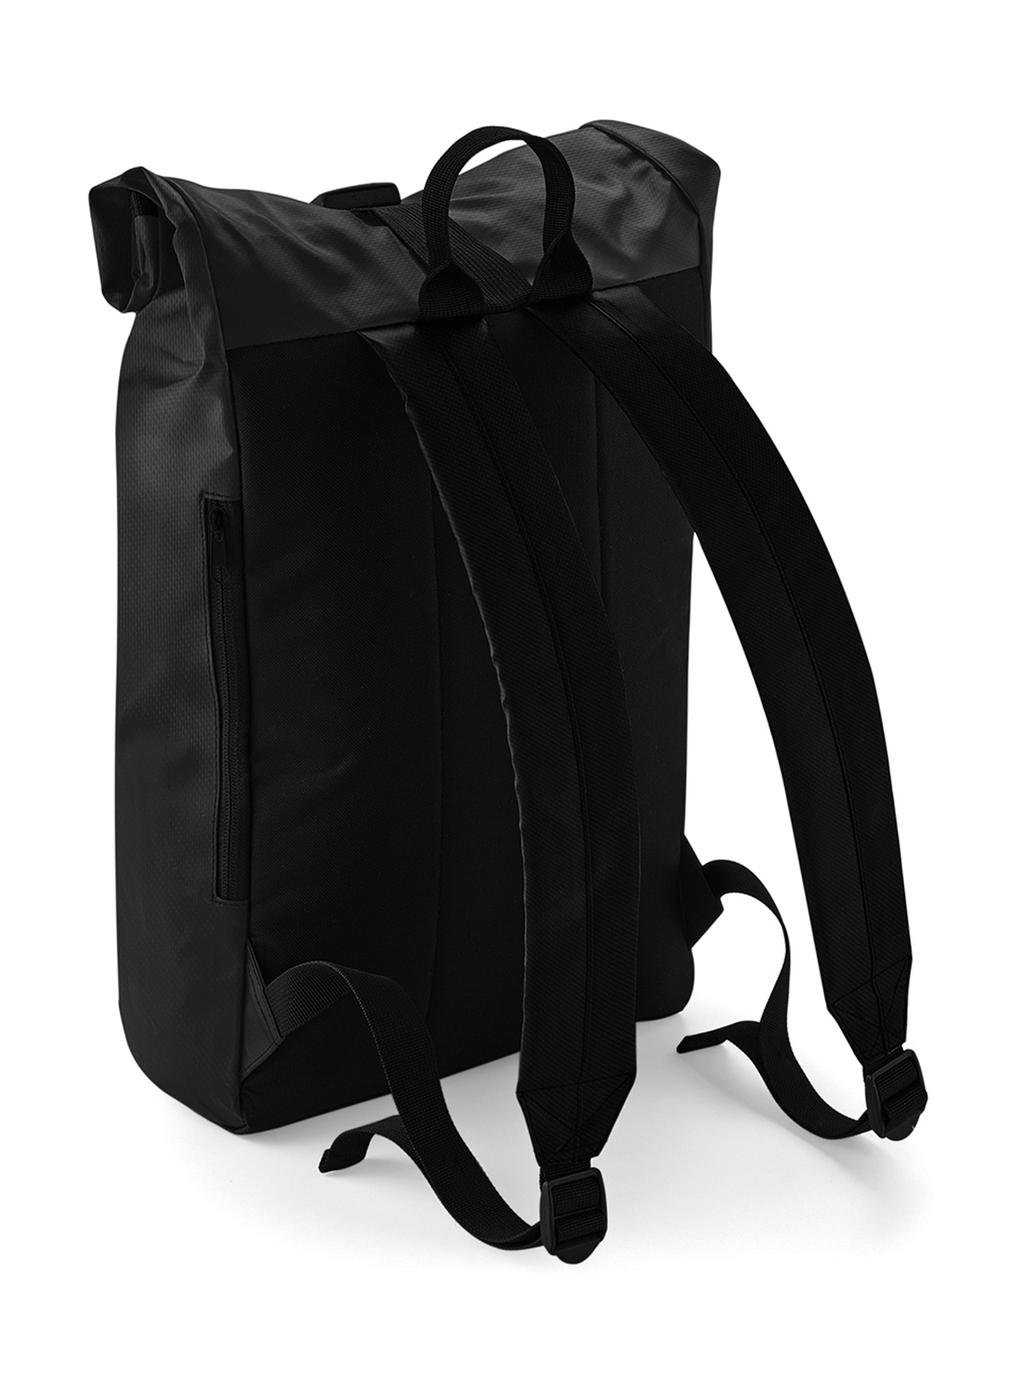  Tarp Roll Top Backpack in Farbe Black